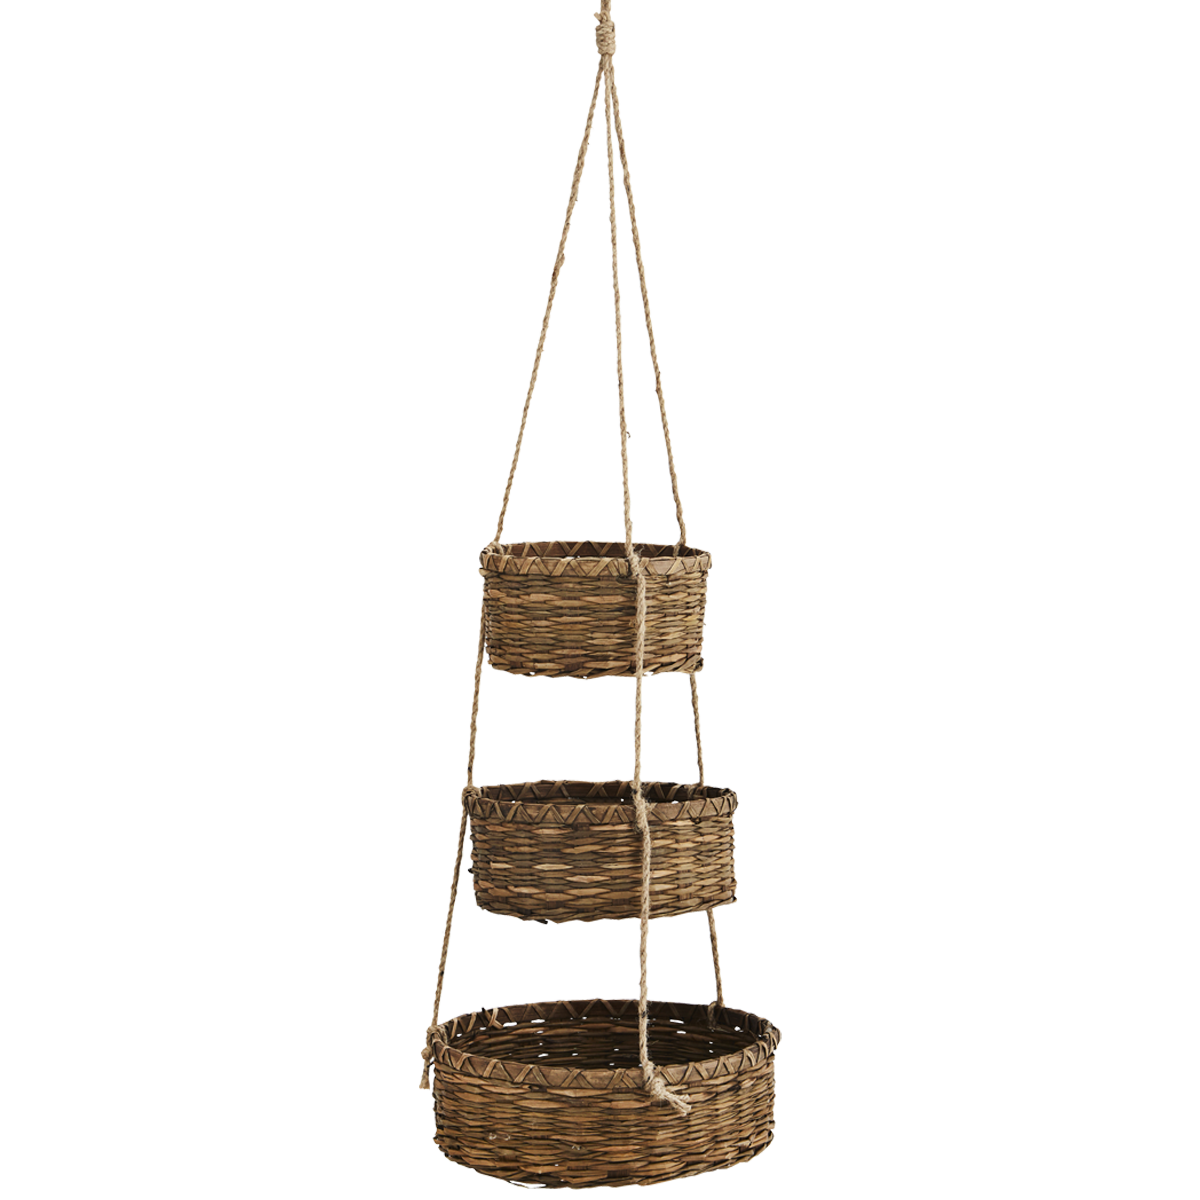 Hanging grass baskets